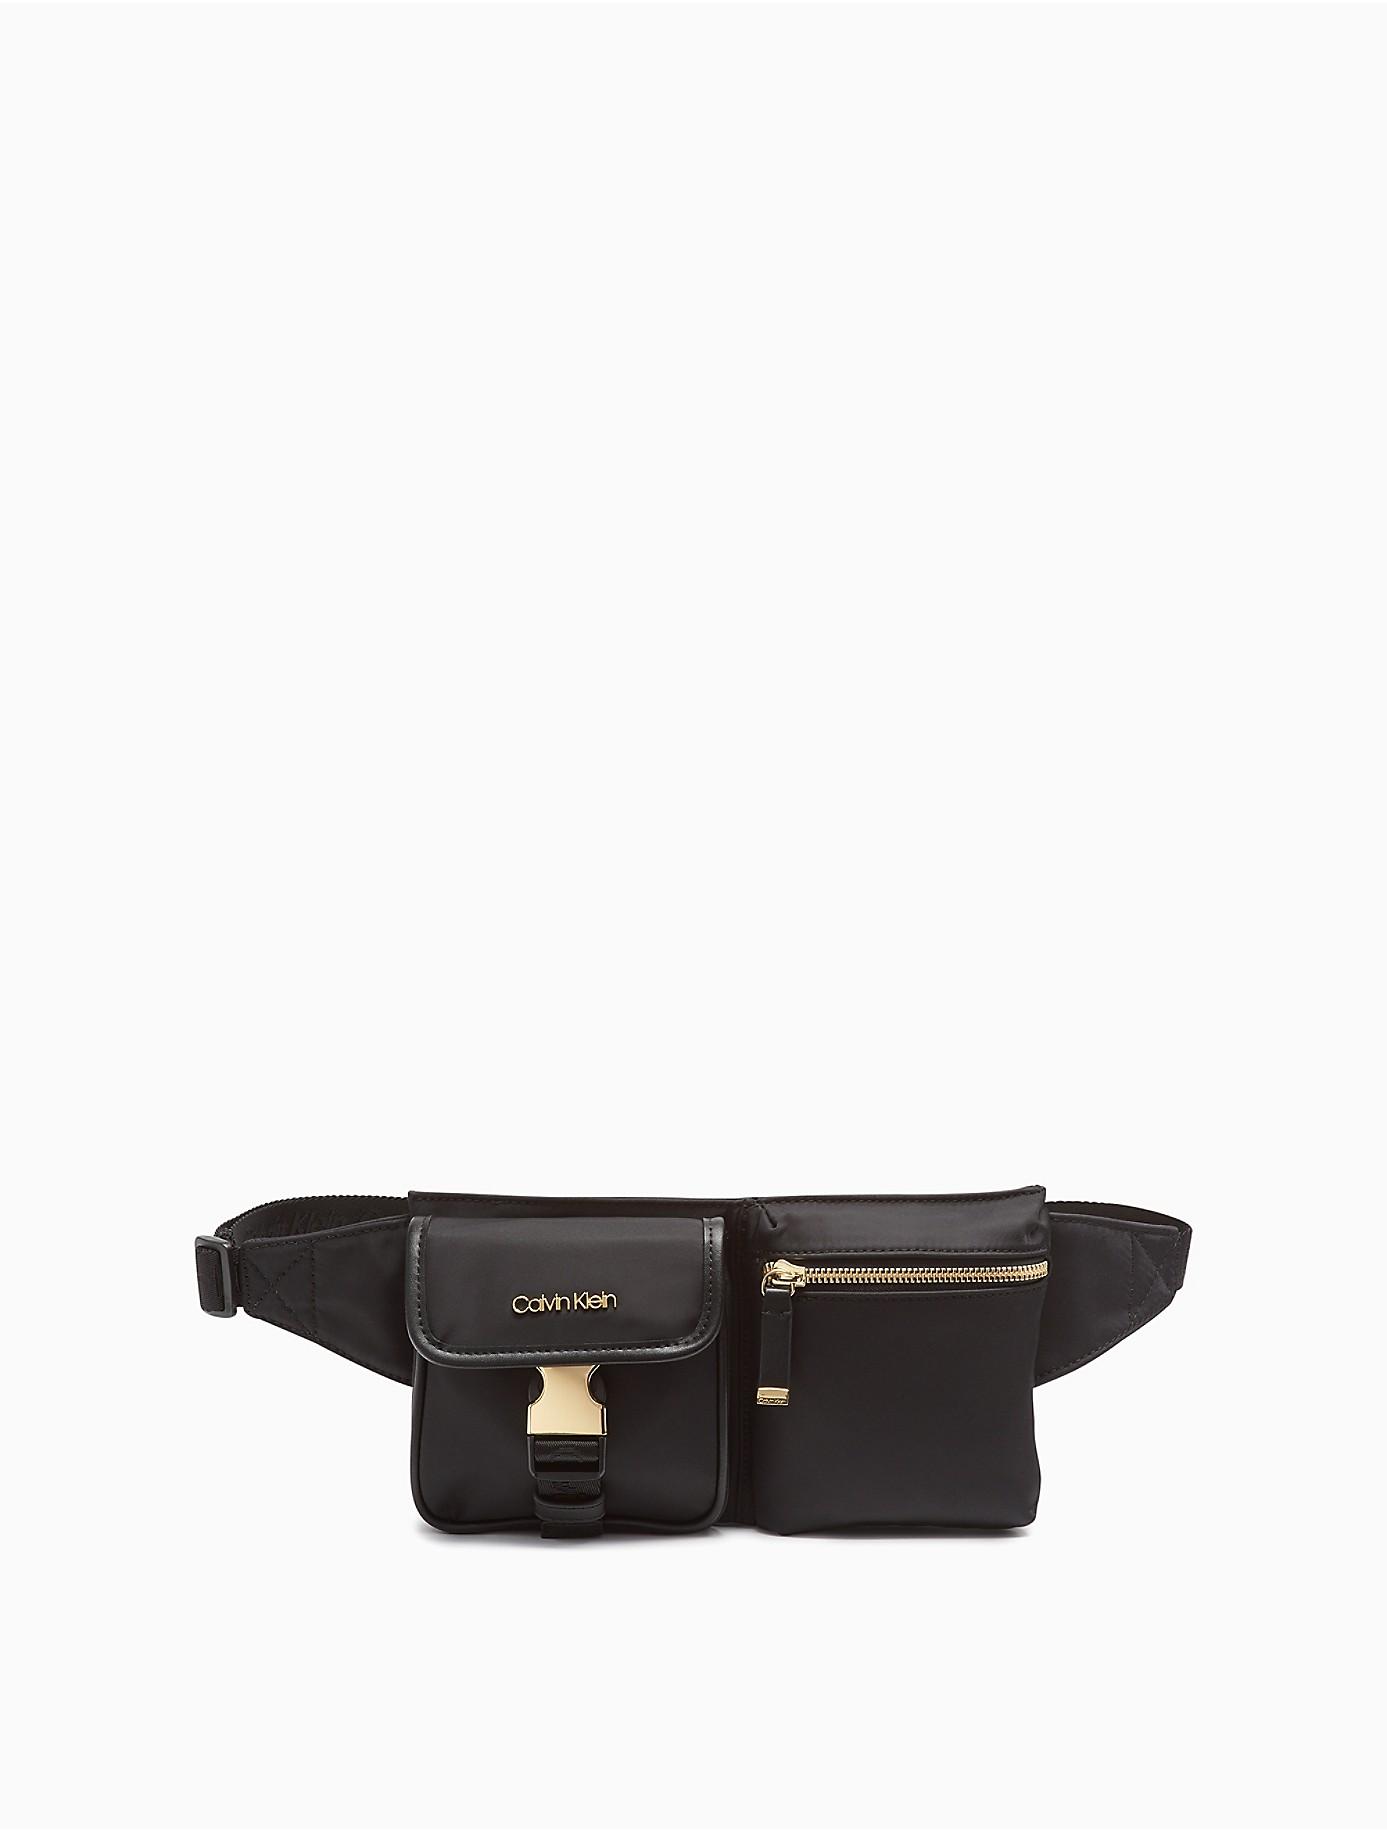 Calvin Klein Synthetic Nylon Dual Pouch Belt Bag in Black/Gold (Black ...